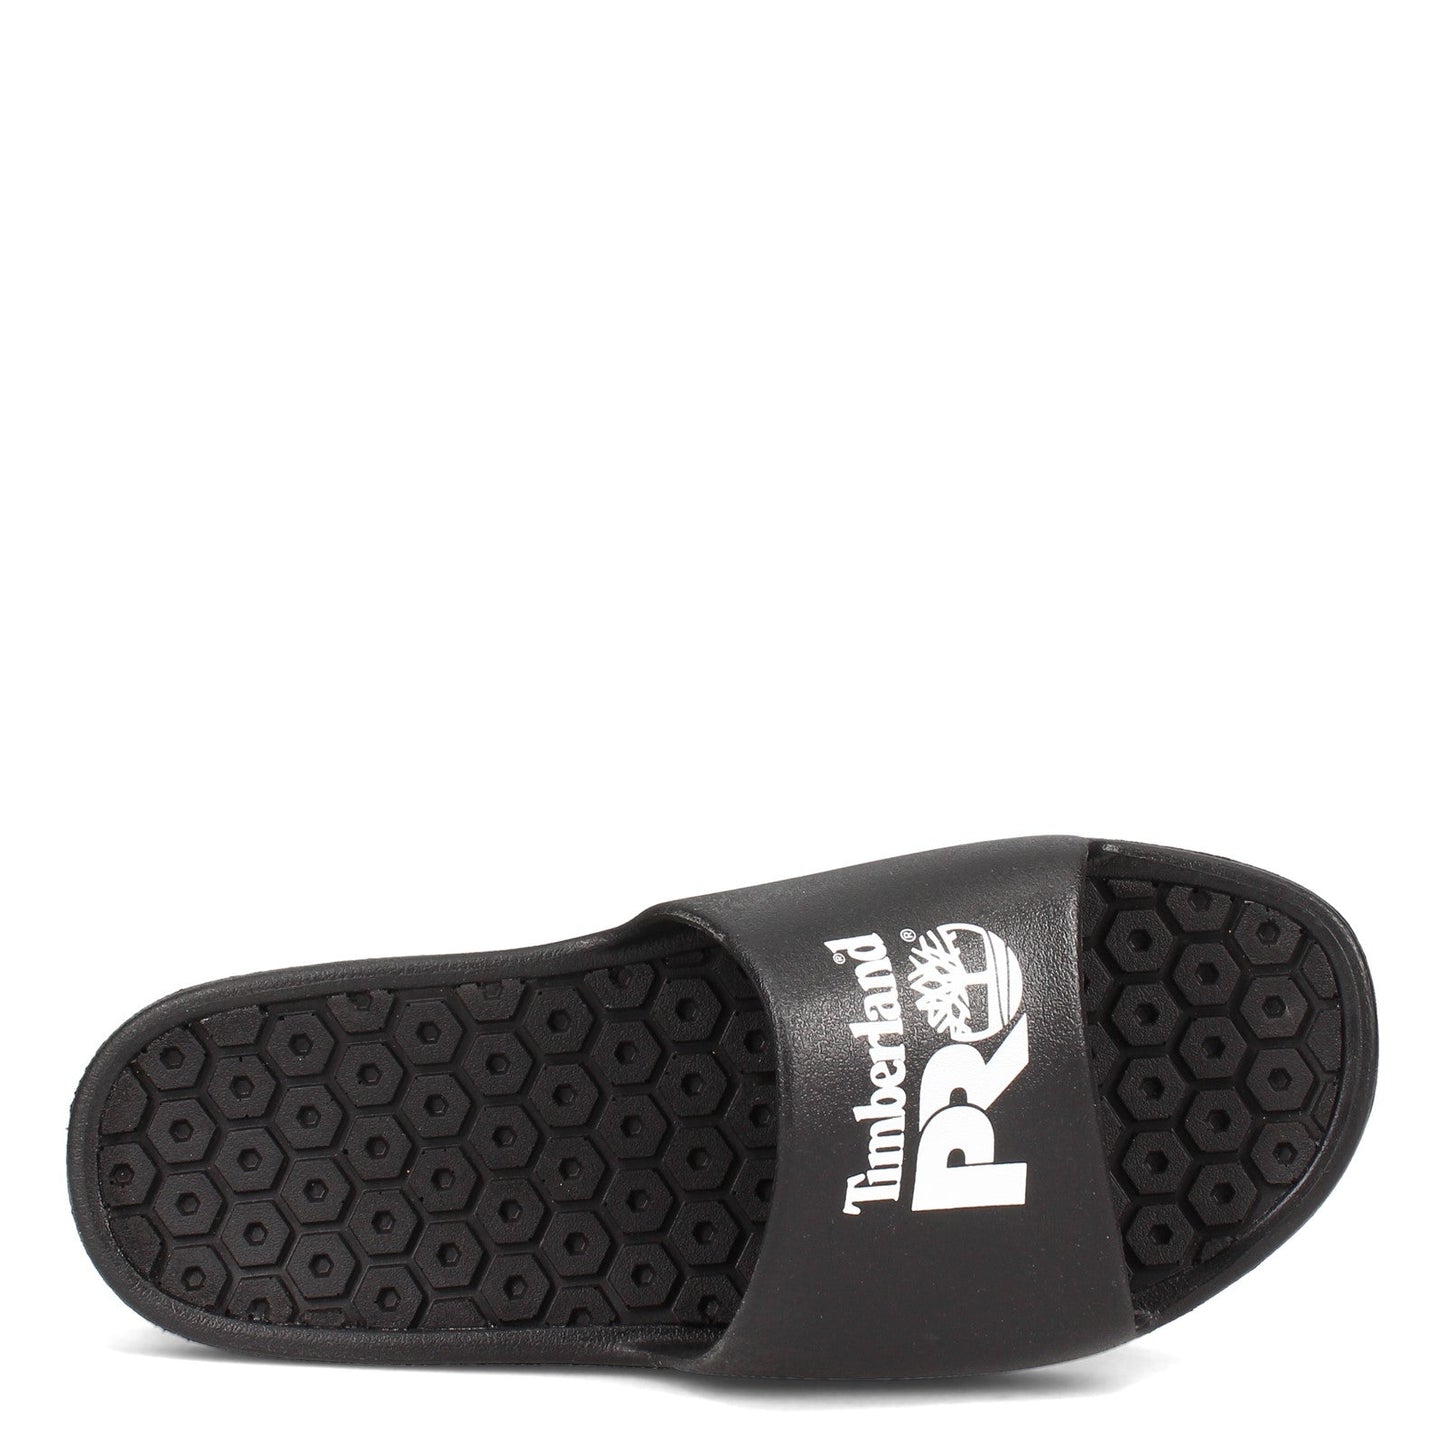 Timberland PRO Mens Size 14M Black White Slides Shower Shoes TB 0A2A7C 001 AFT